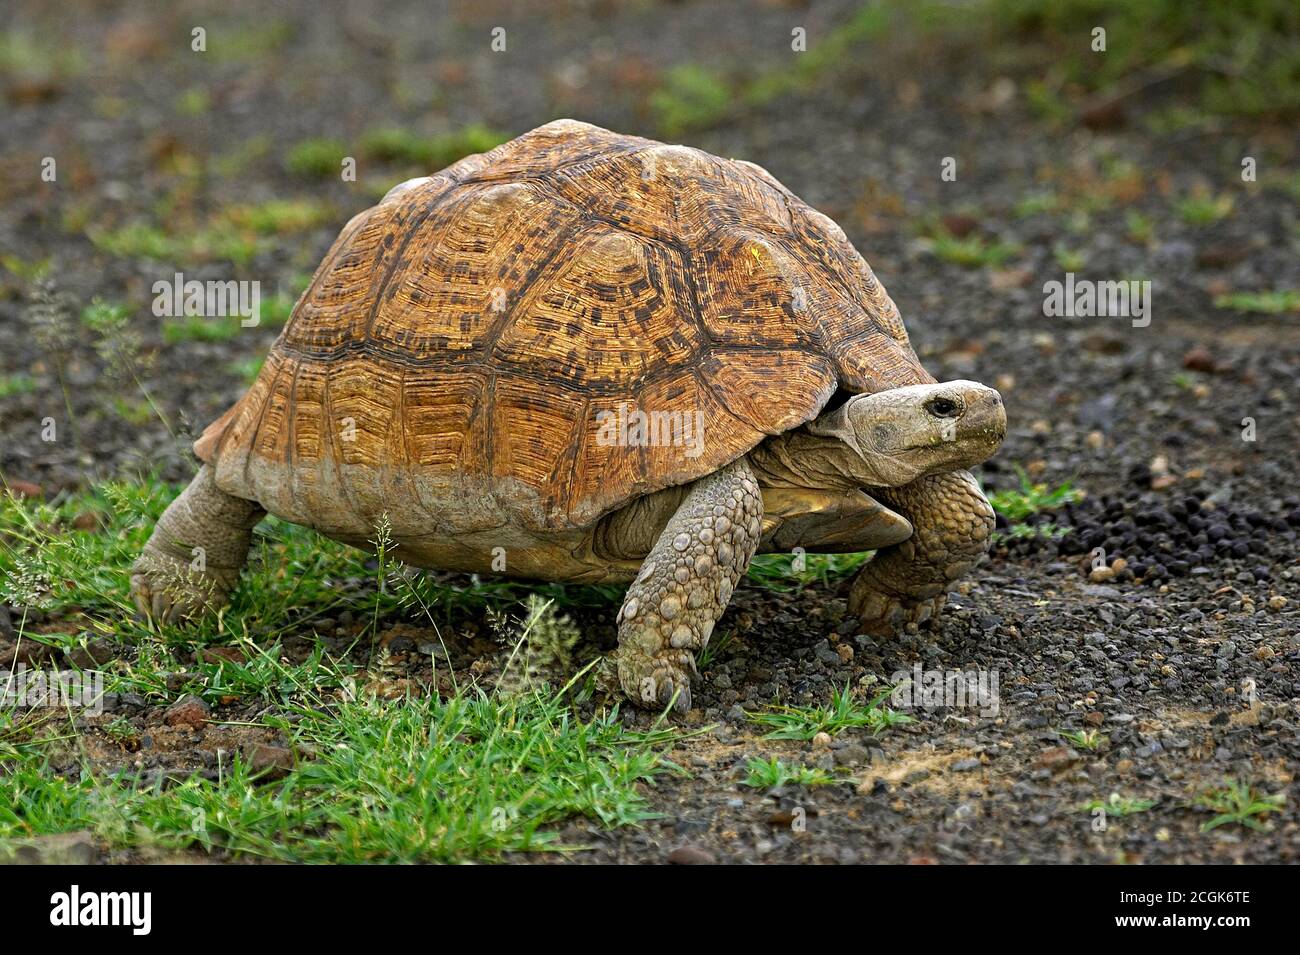 Leopard Tortoise, geochelone pardalis, Adult standing on Grass, Kenya Stock Photo